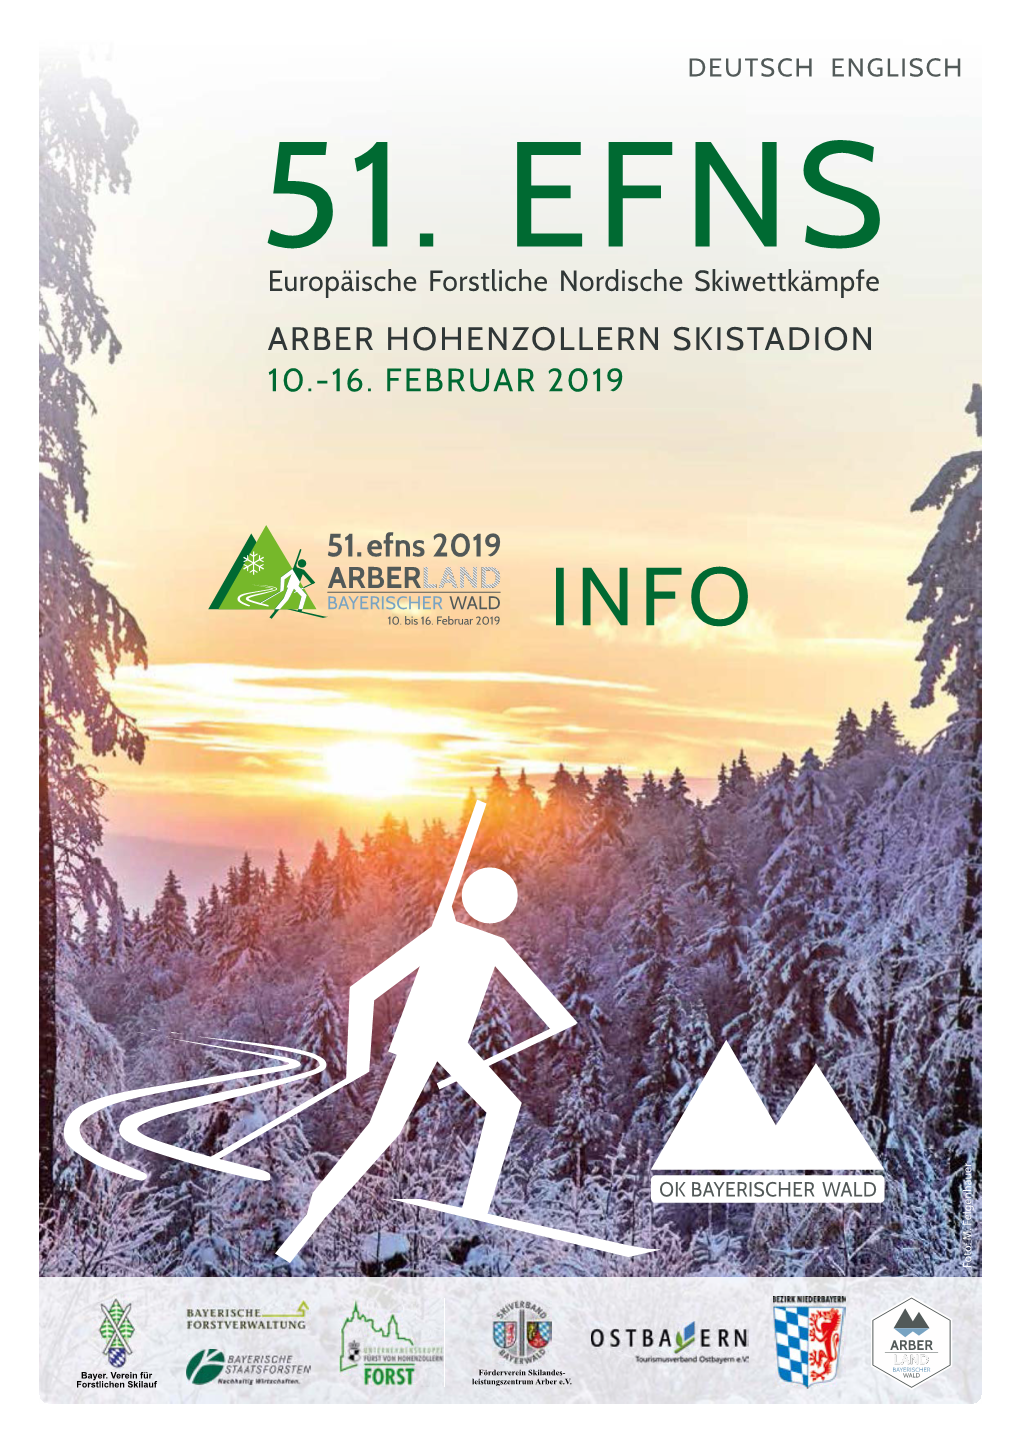 Arber Hohenzollern Skistadion 10.-16. Februar 2019